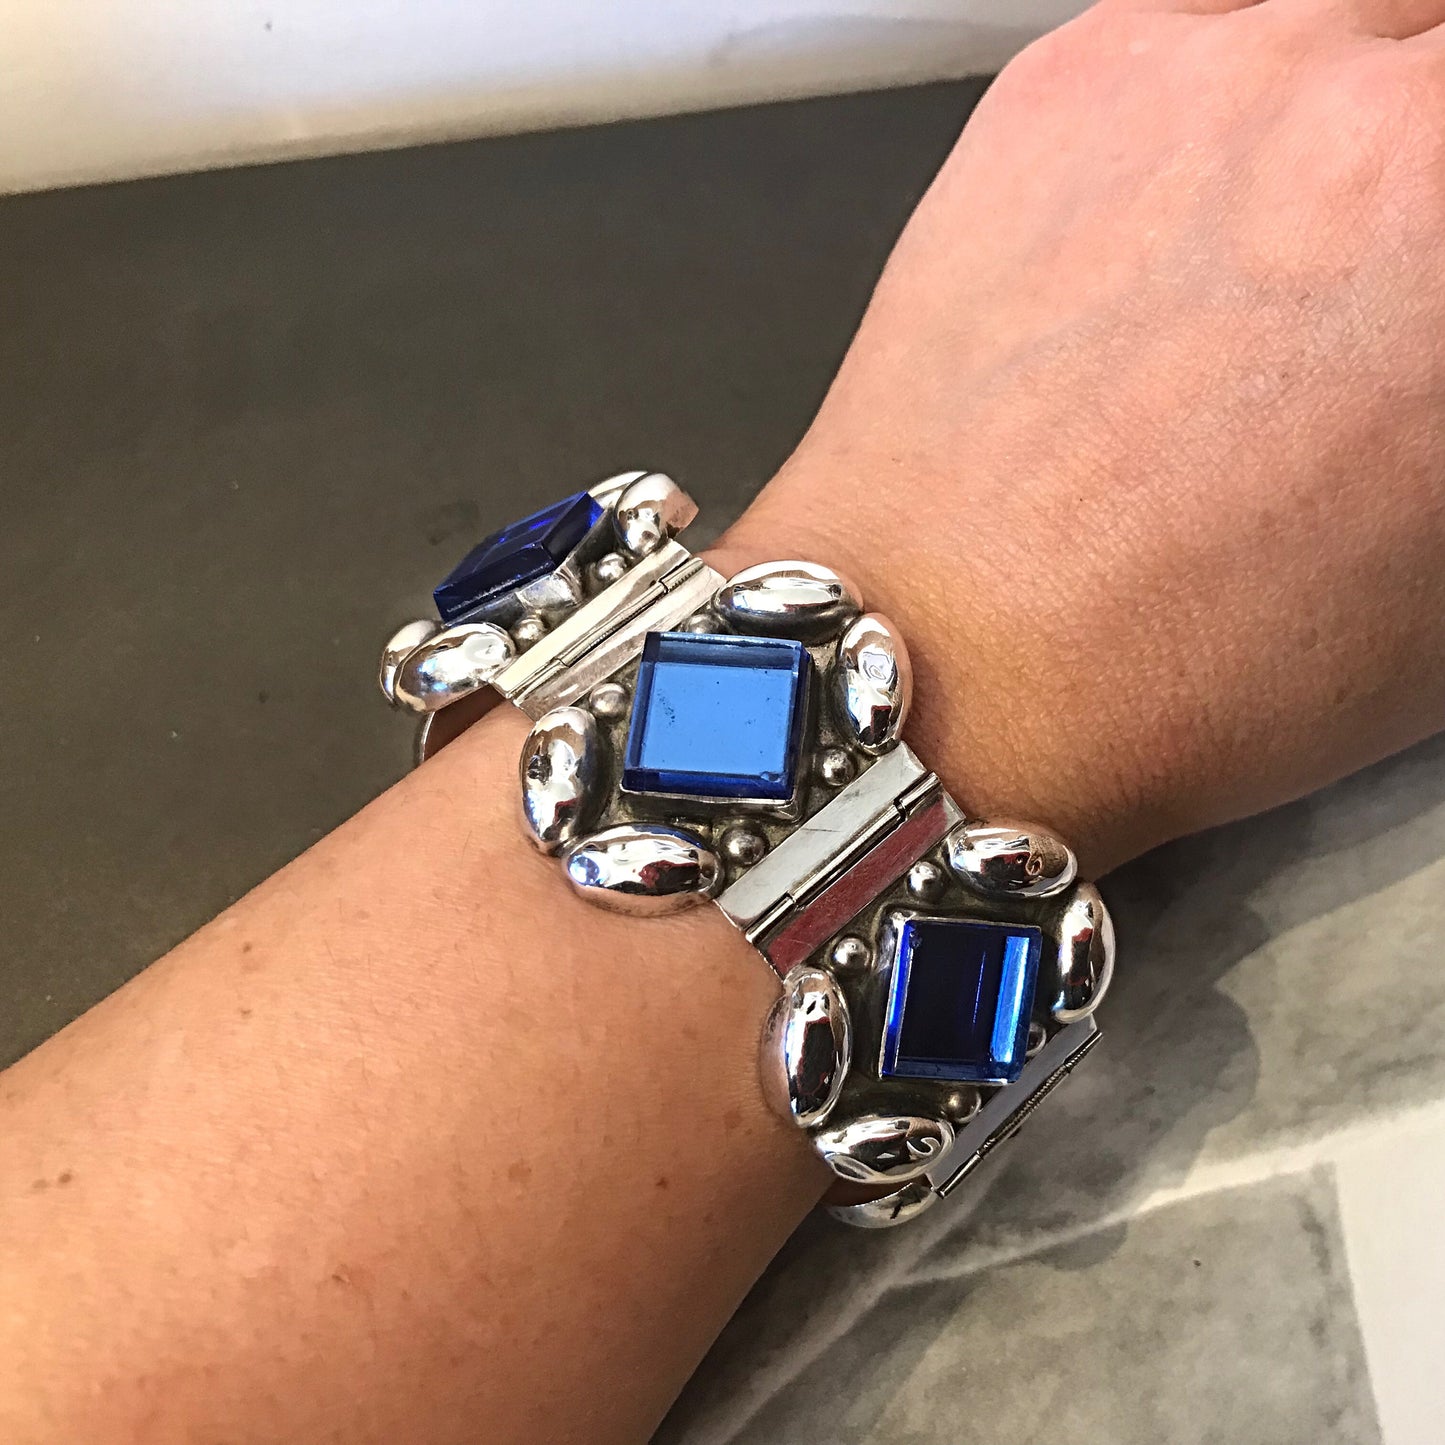 Handmade Sterling Silver Vintage Blue Glass bracelet statement Artisan